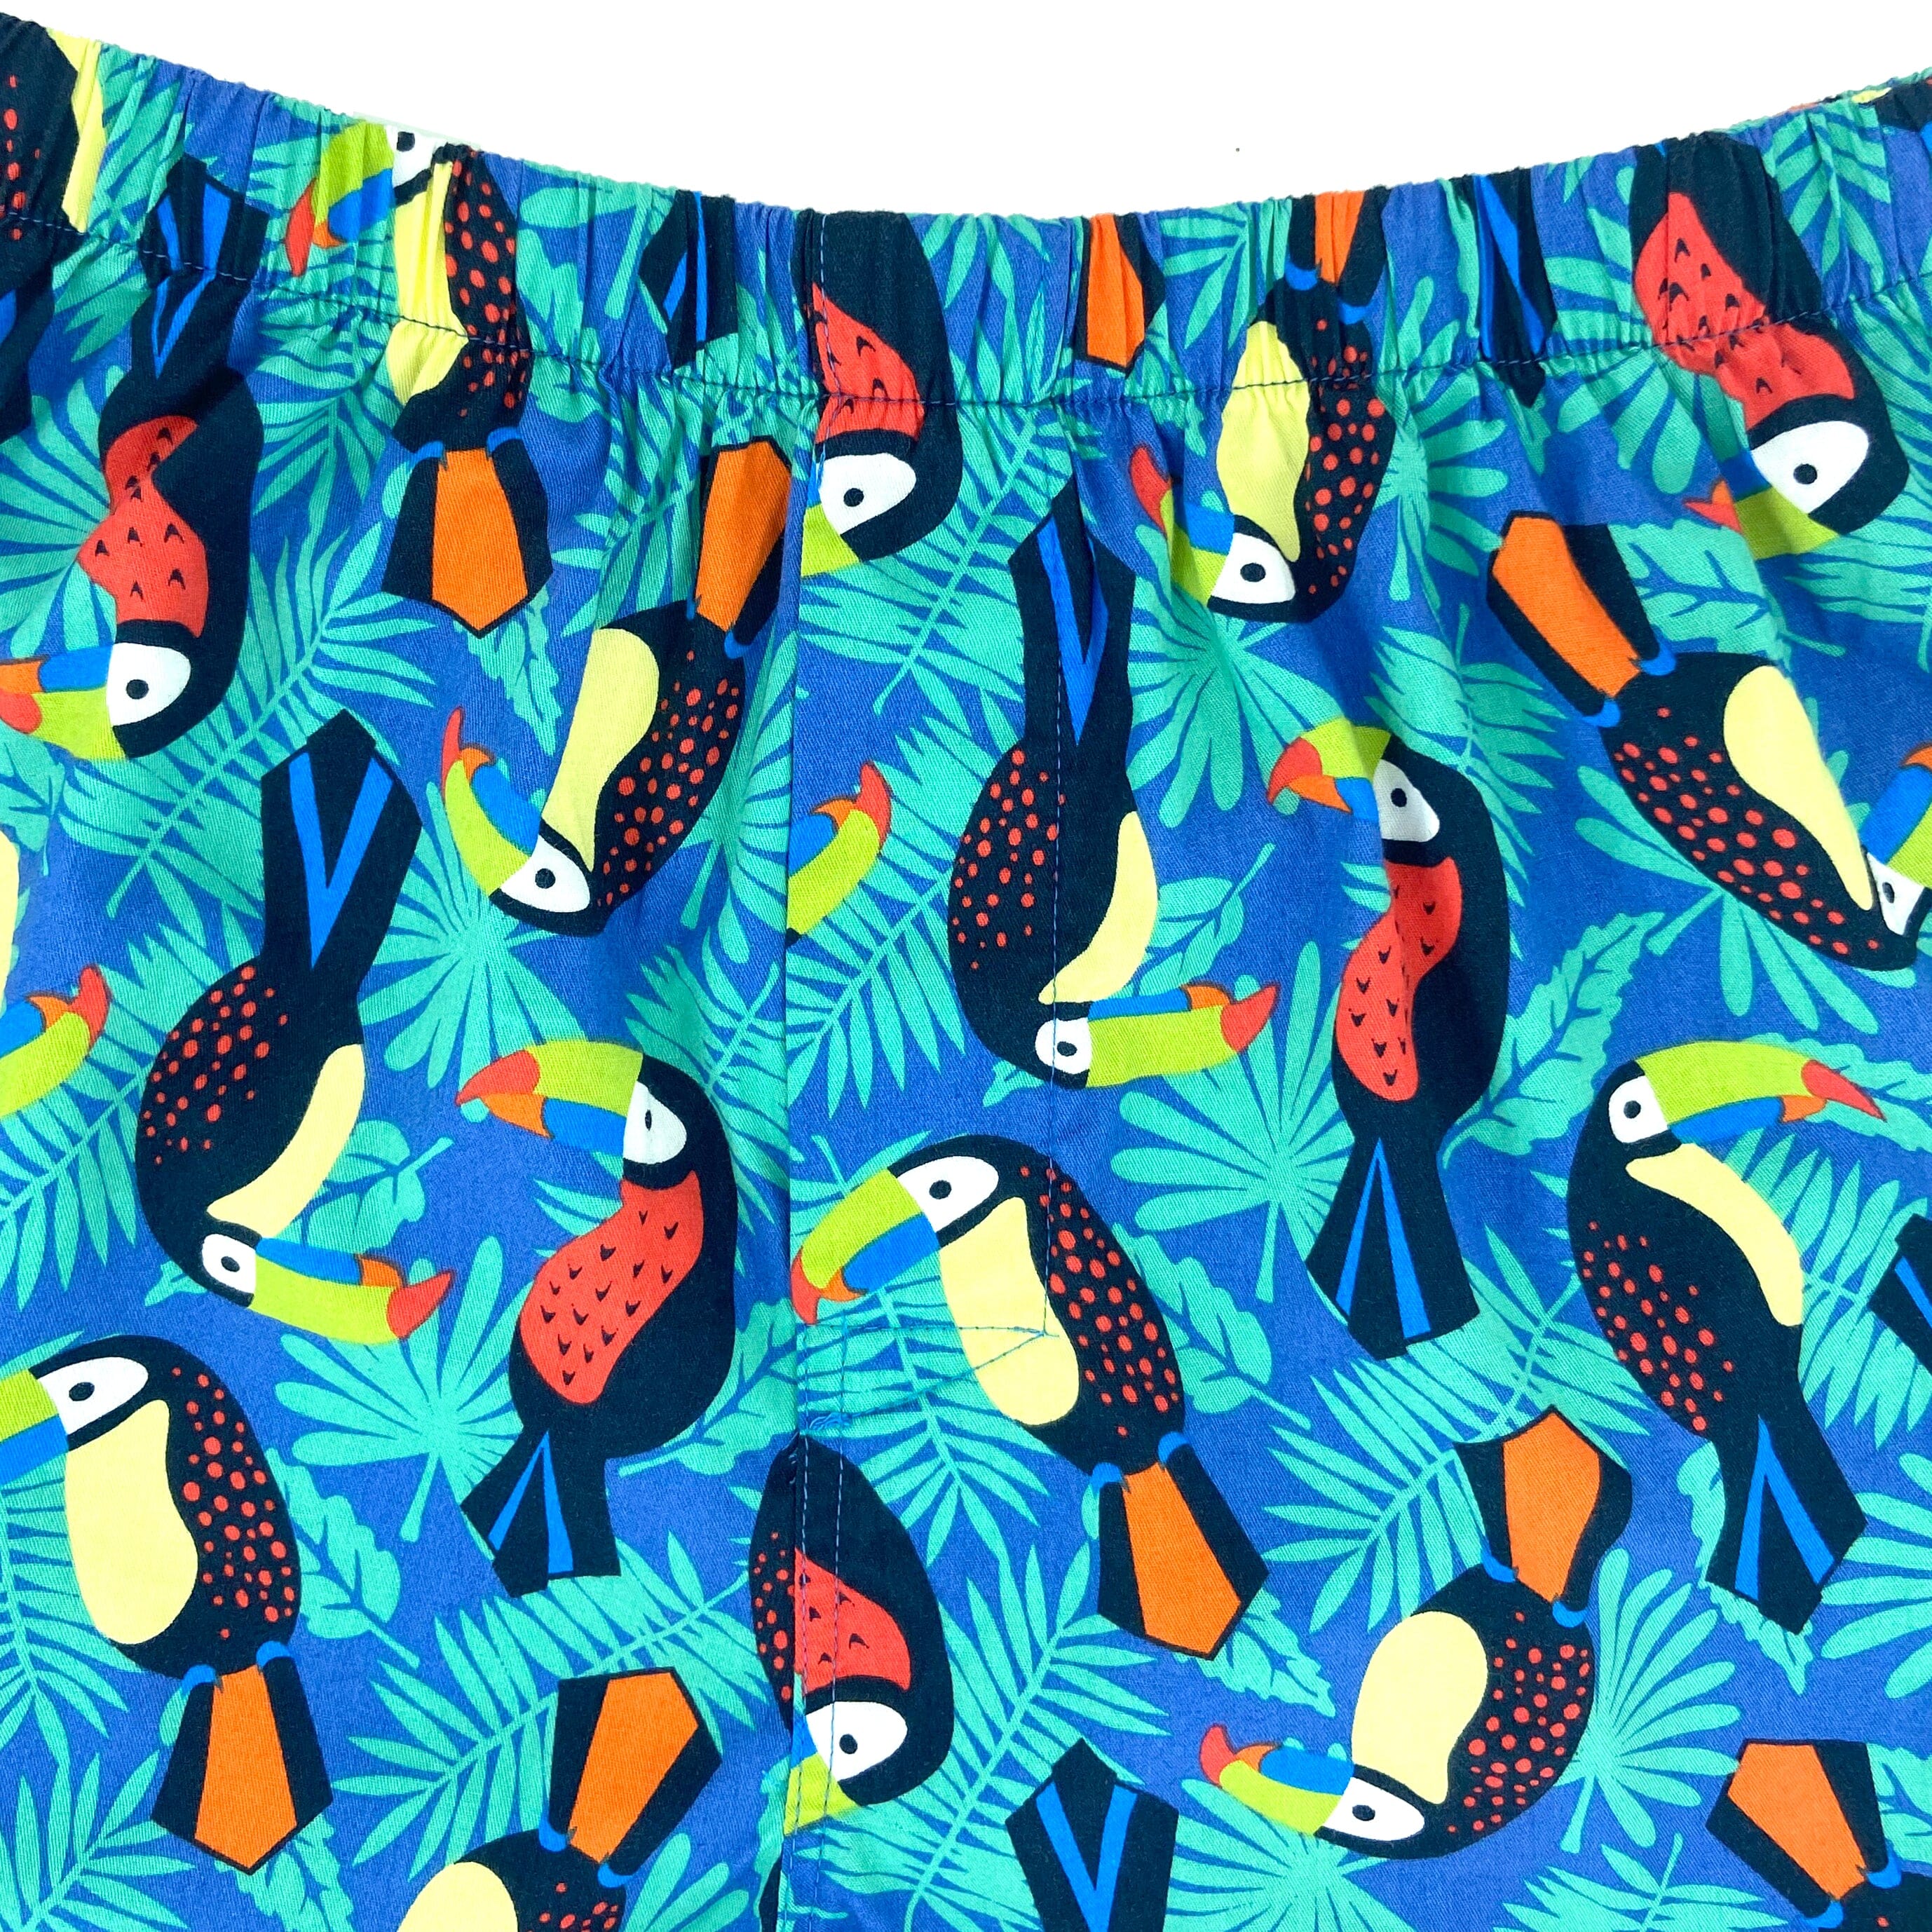 Men's Vibrant Toucan Bird Animal Patterned Cotton Boxer Shorts S-XXL